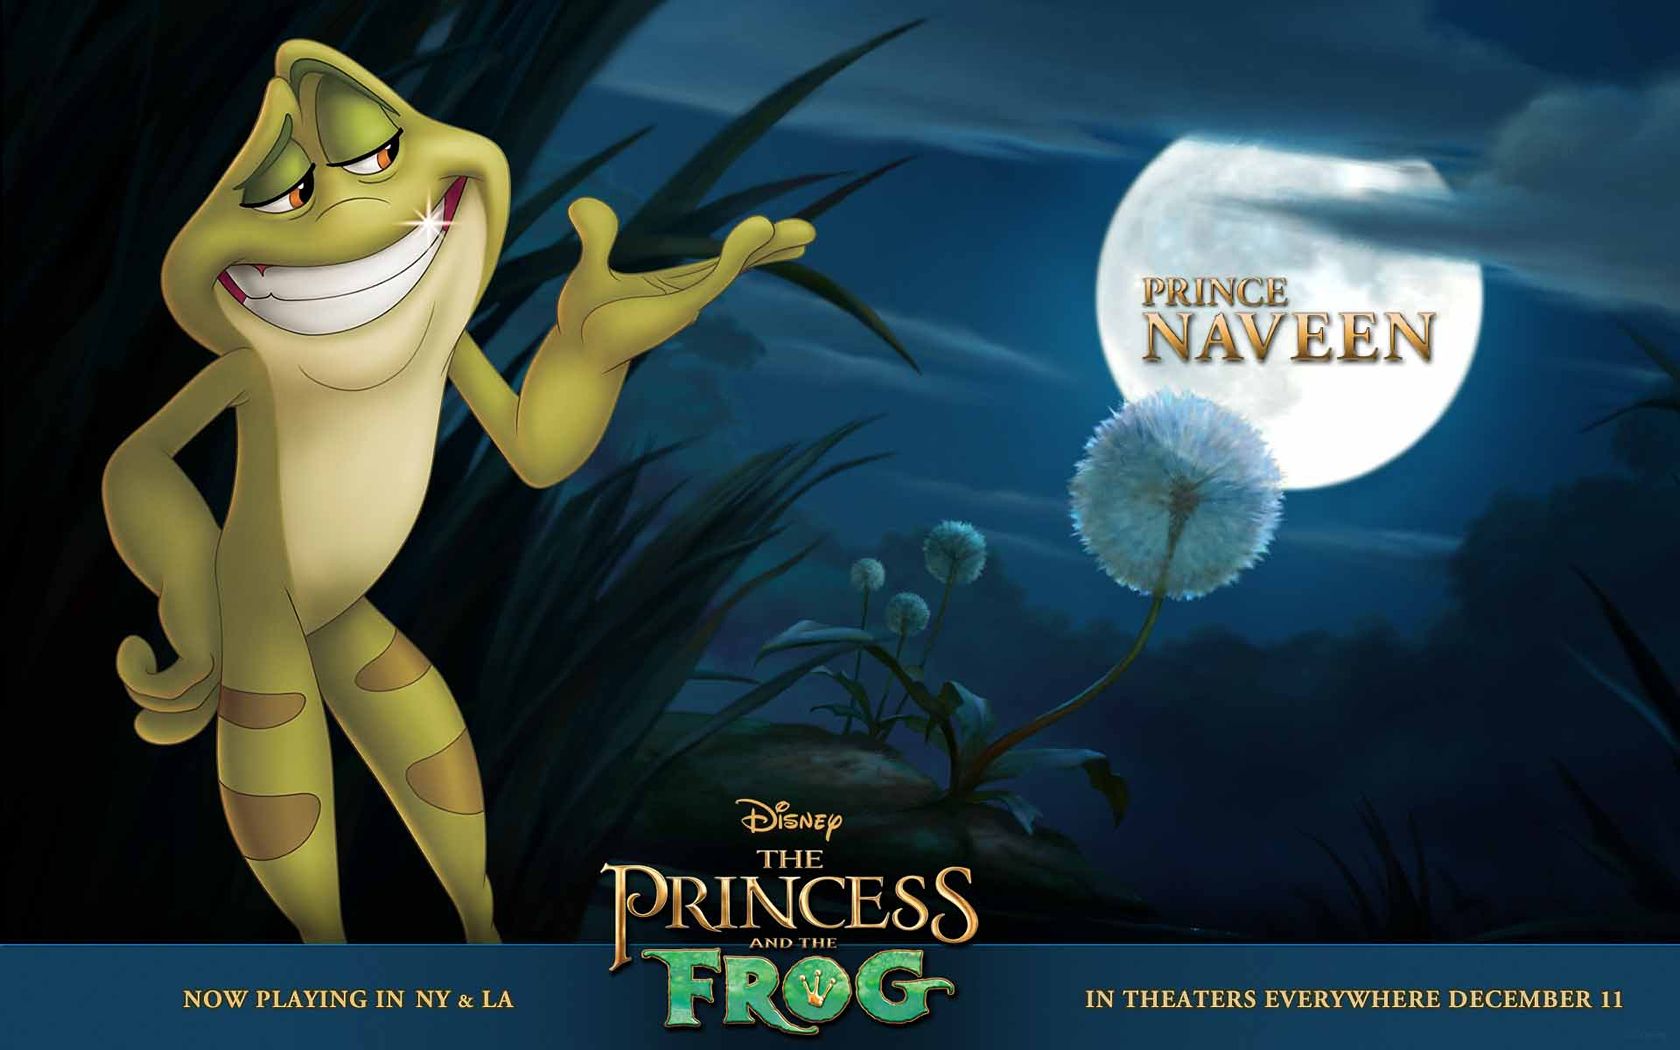 "The Princess and the Frog: Prince Naveen" desktop wallpaper (1680 x 1050 pixels)